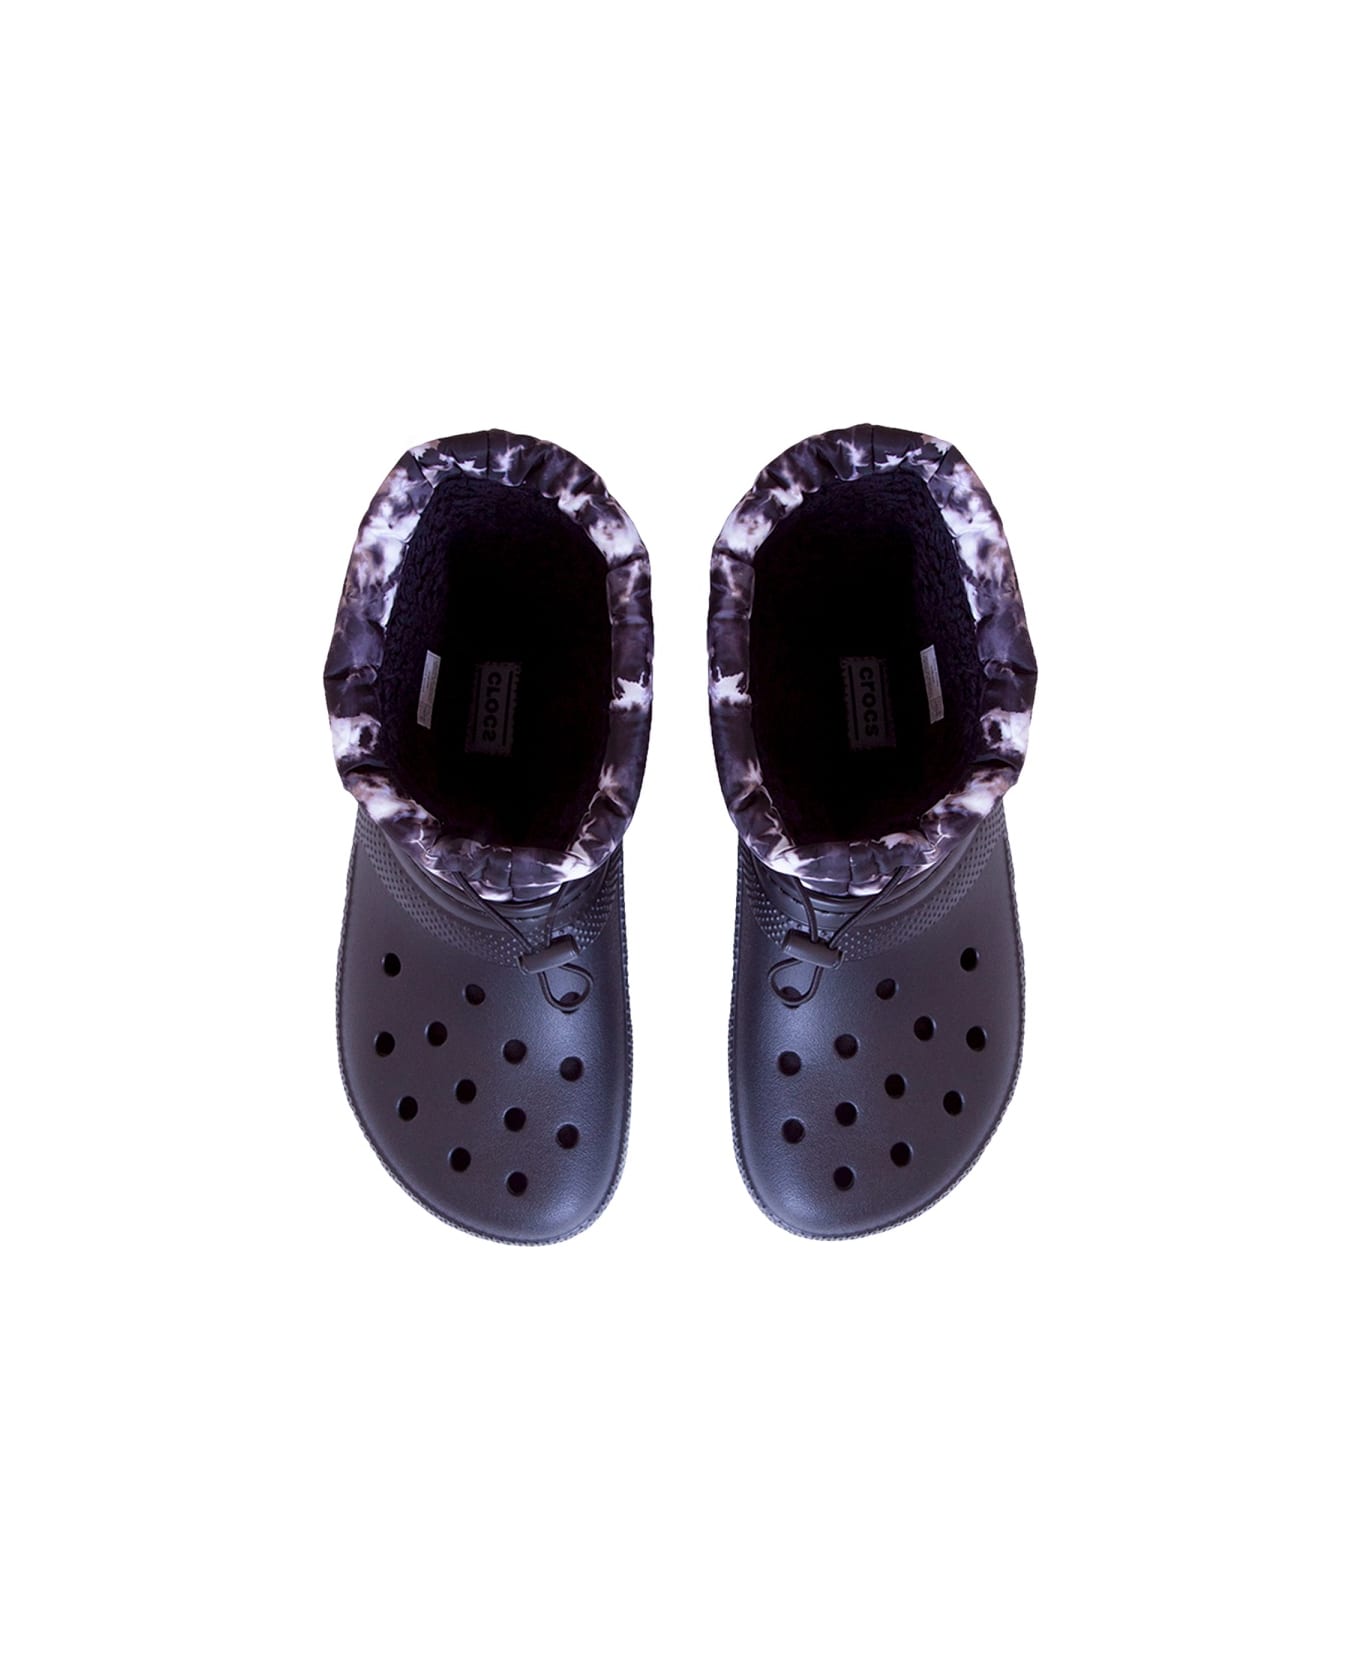 Crocs Tye Dye Lined Boot - BLACK